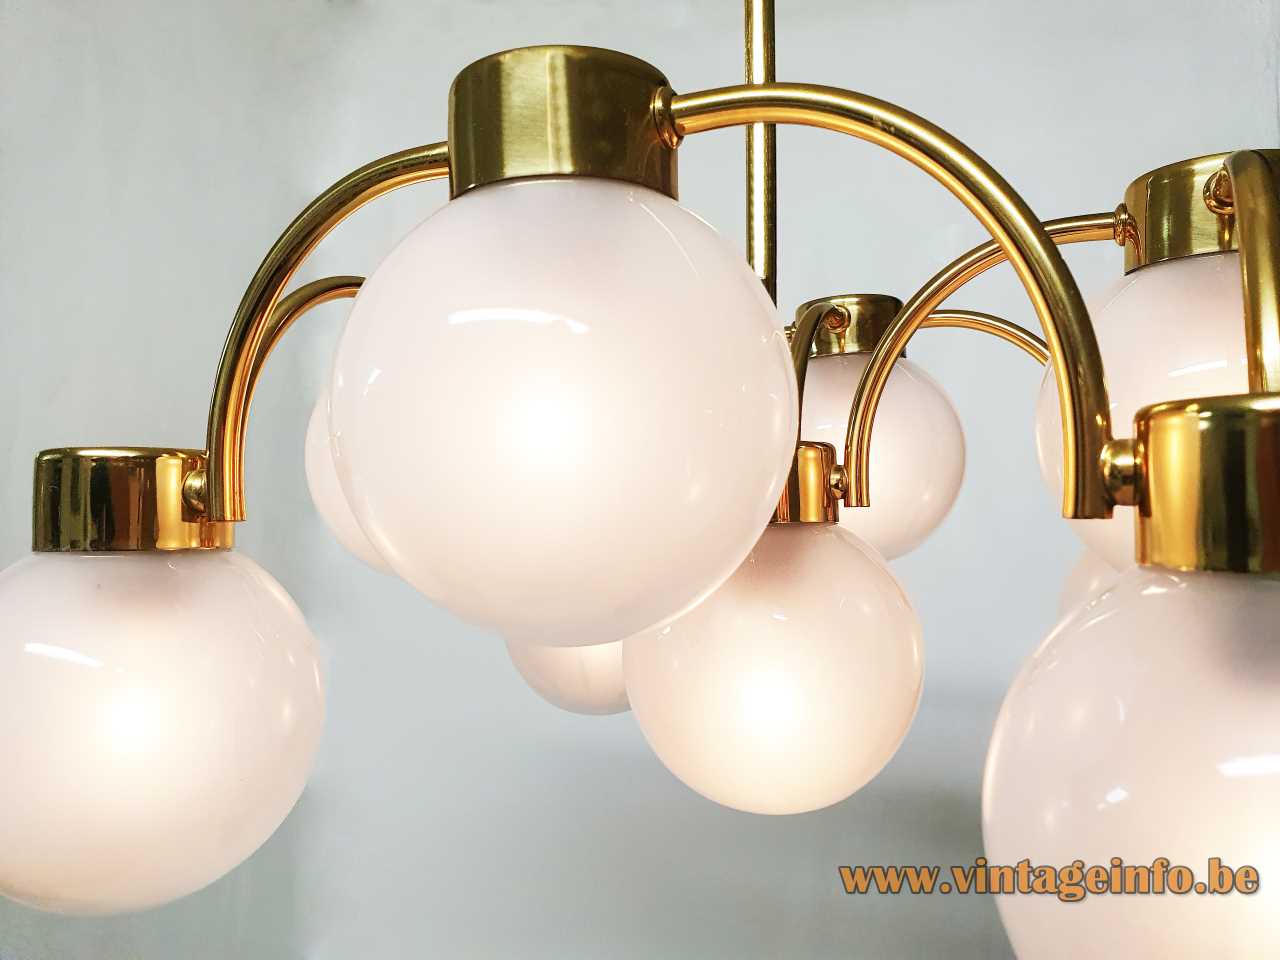 Boulanger opal globes chandelier curved brass rods 9 misty glass spheres 1970s Belgium 9 E14 sockets